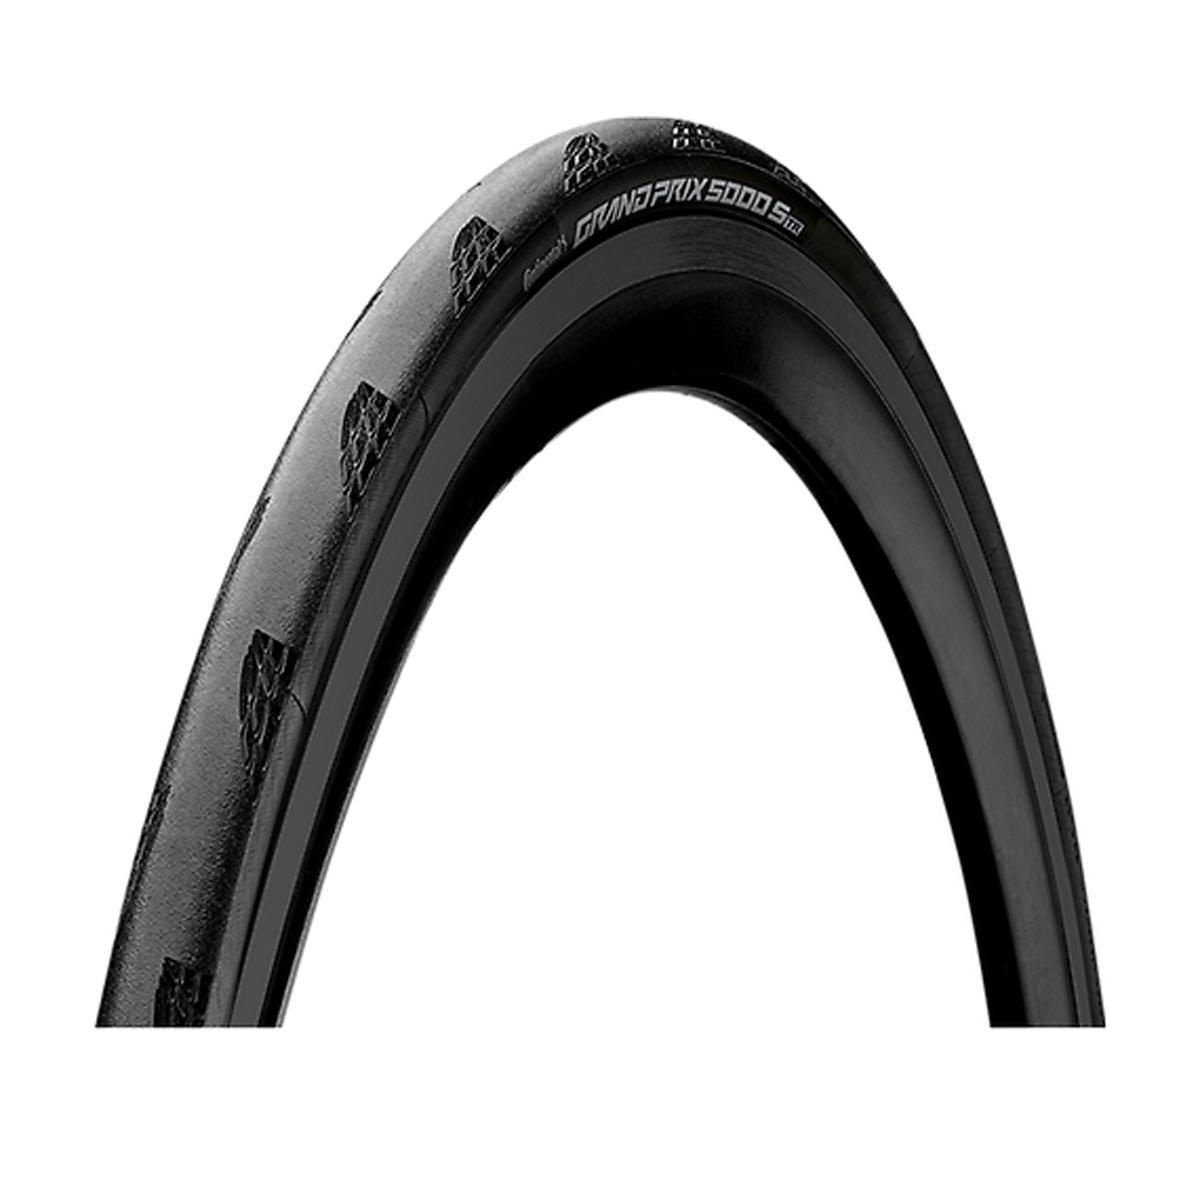 Continental Grand Prix 5000 S Tr (Tubeless, Folding, 220Tpi) Road Bike Tire Black/Black 700c x 25mm*Damaged Packaging*